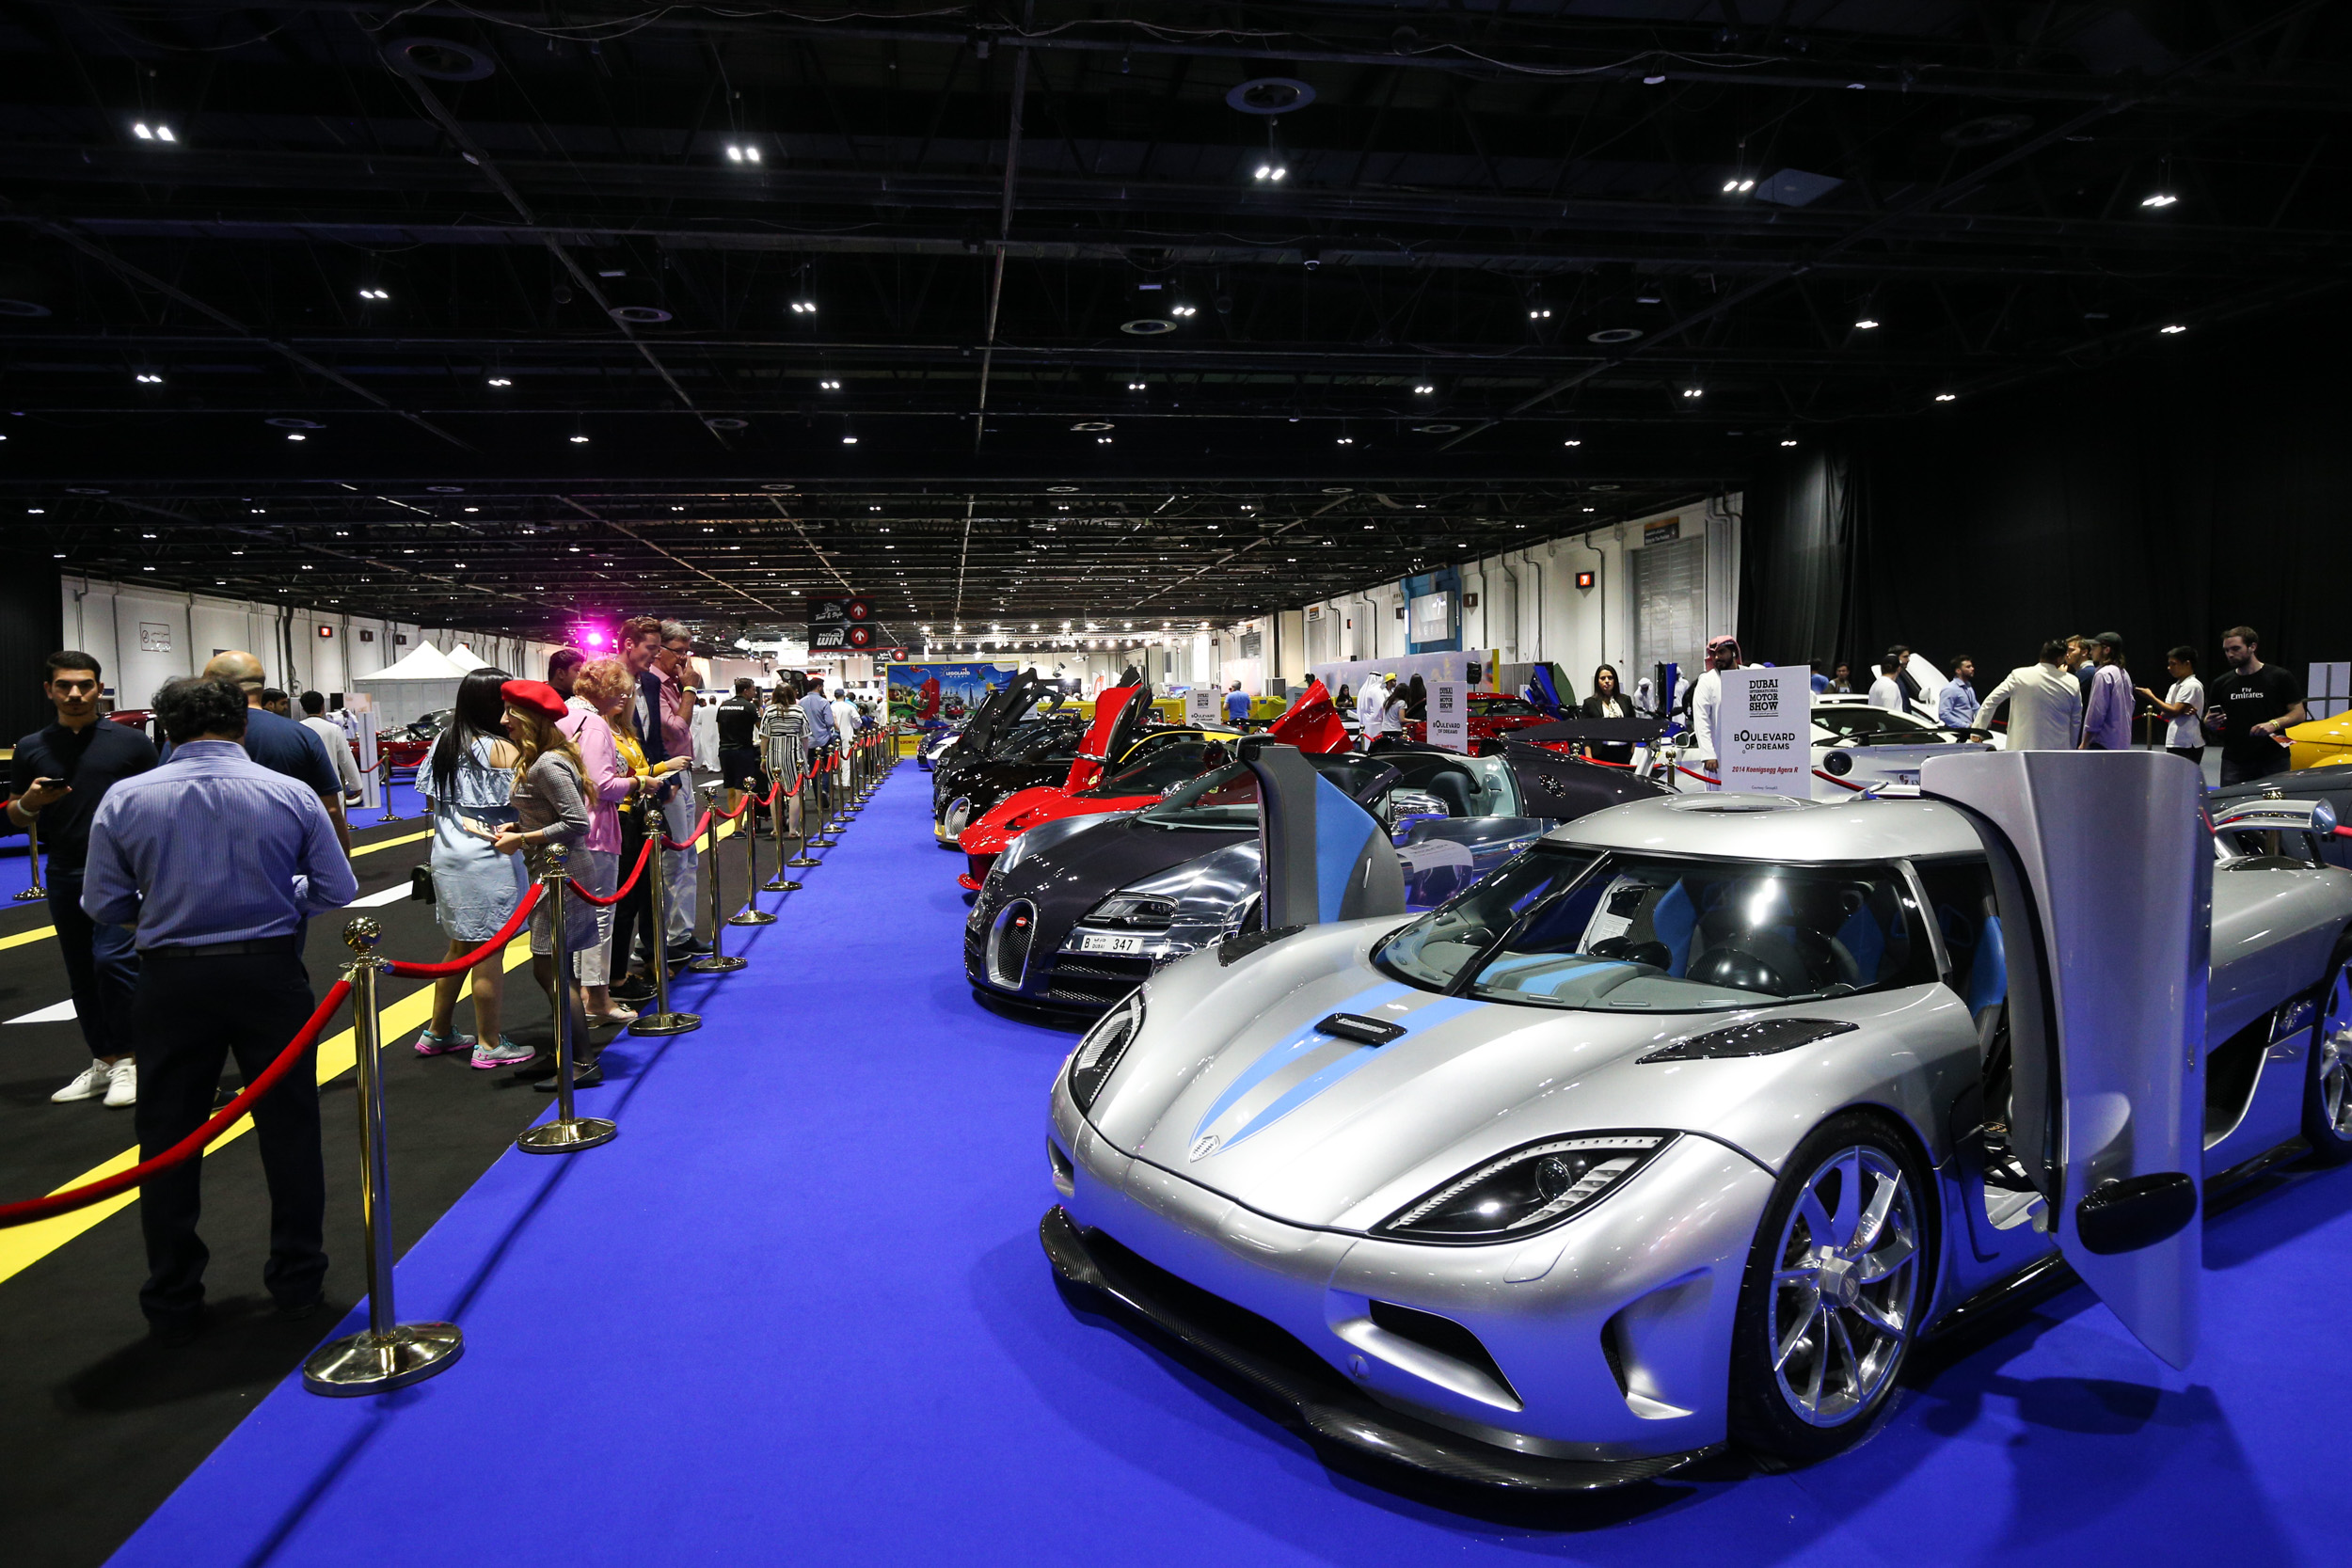 Dubai International Motor Show Returns with Focus on ‘Future Mobility